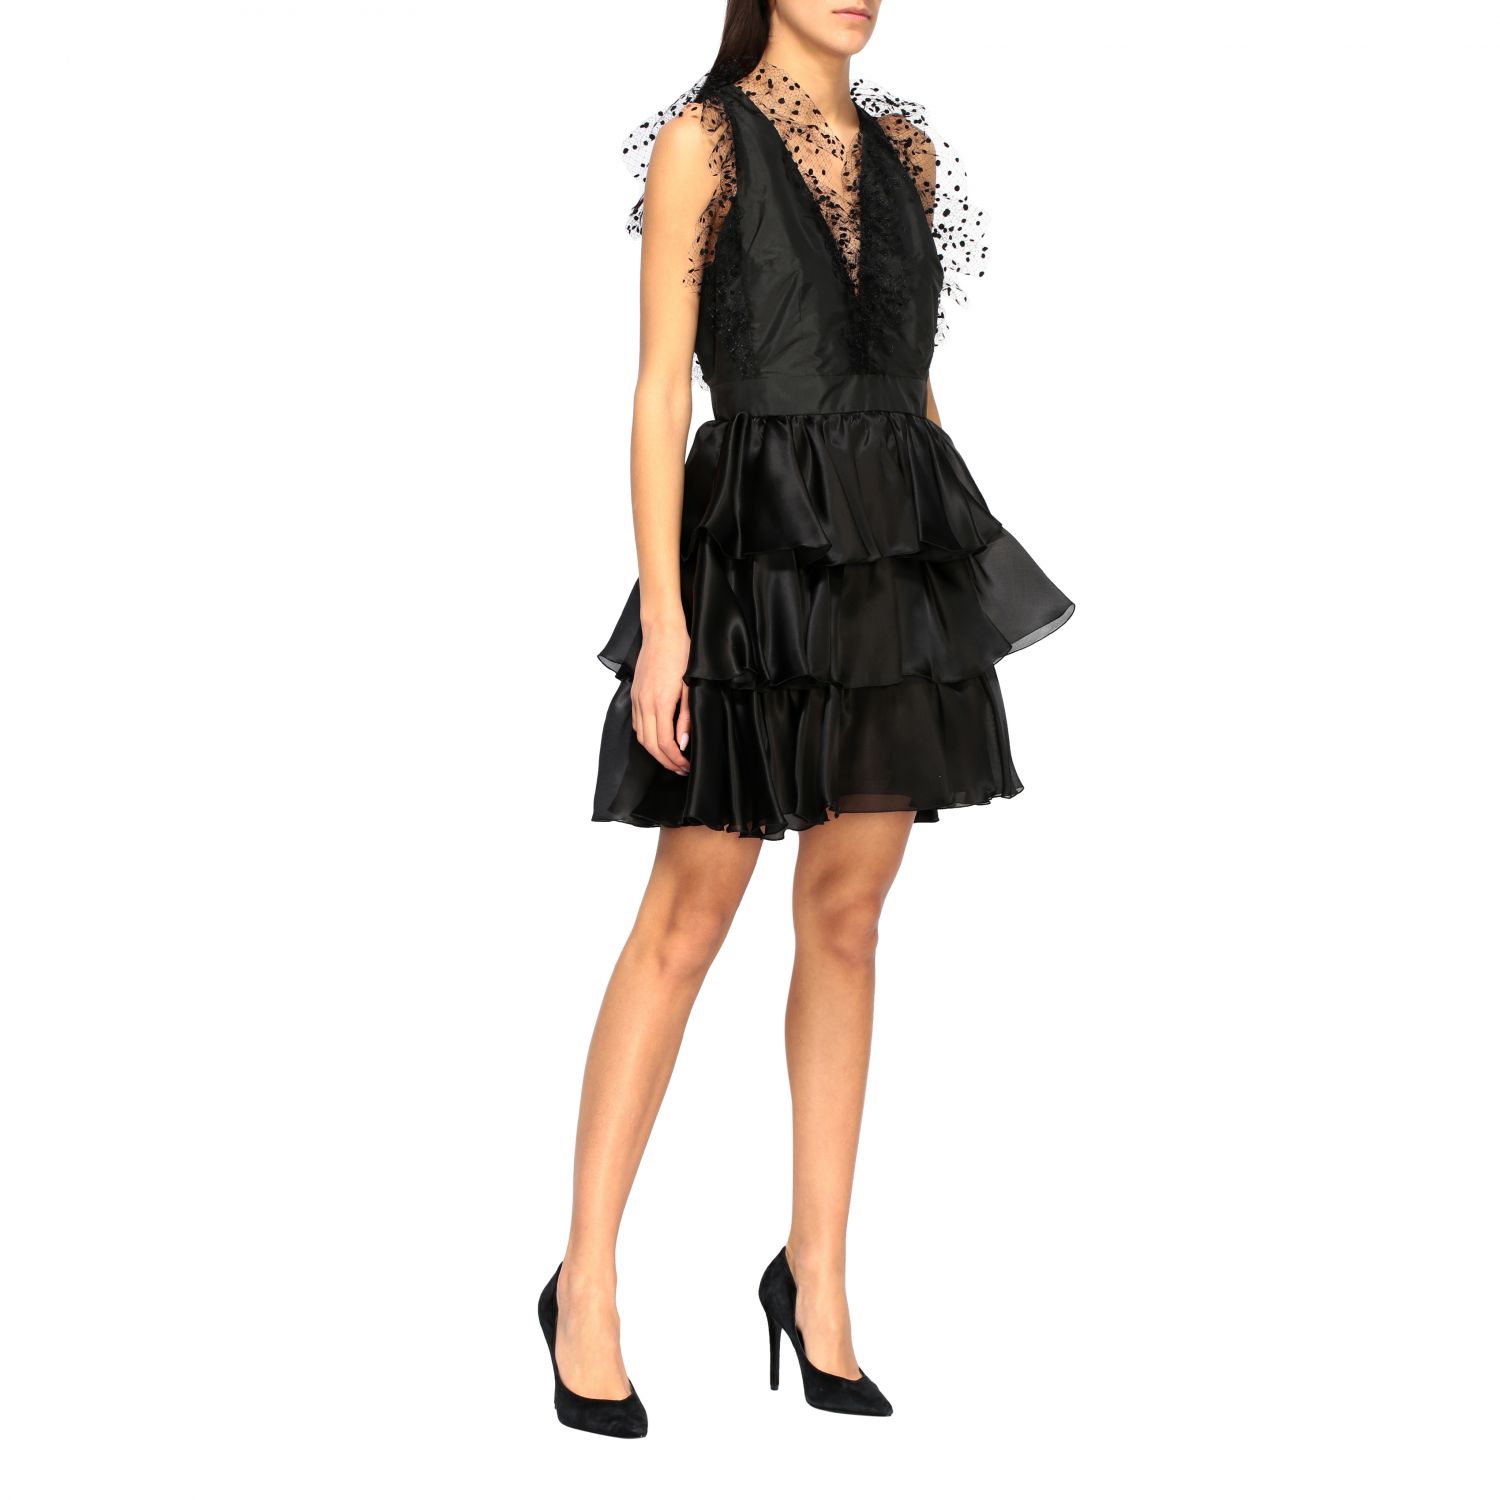 Giamba Outlet: dress with polka dot tulle ruffles - Black | Giamba dress  PGCA5003 18TAF online on 